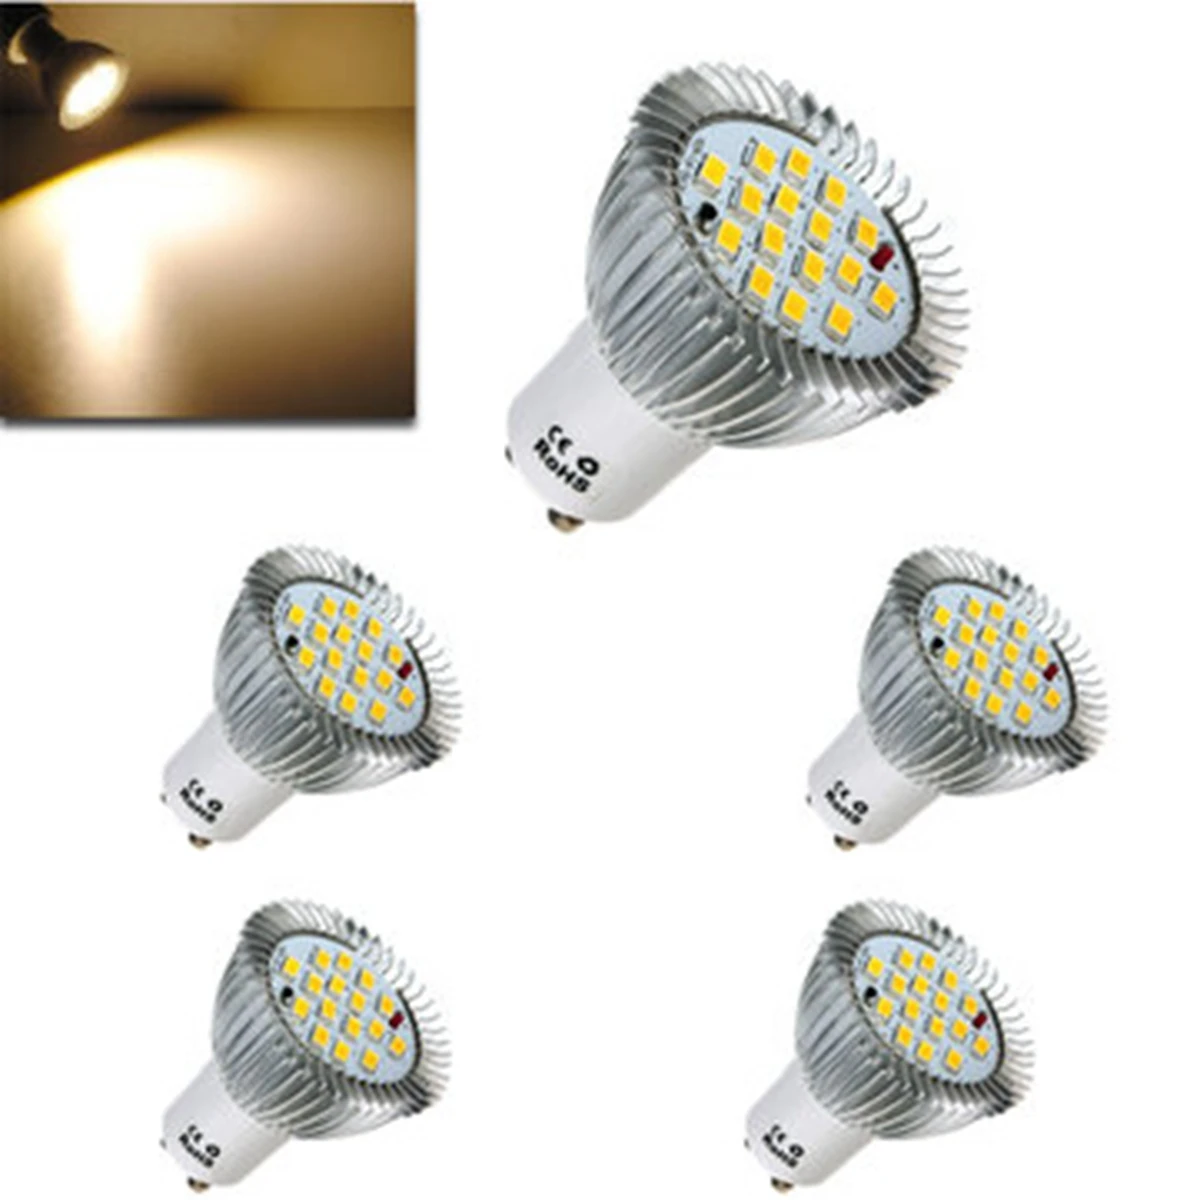 

5x 6.4W LED Light Bulb GU10 16 LED 5630 SMD Energy Saving Lamp Bulb Spotlight Spot Lights Bulbs Warm White Lighting AC 85-265V